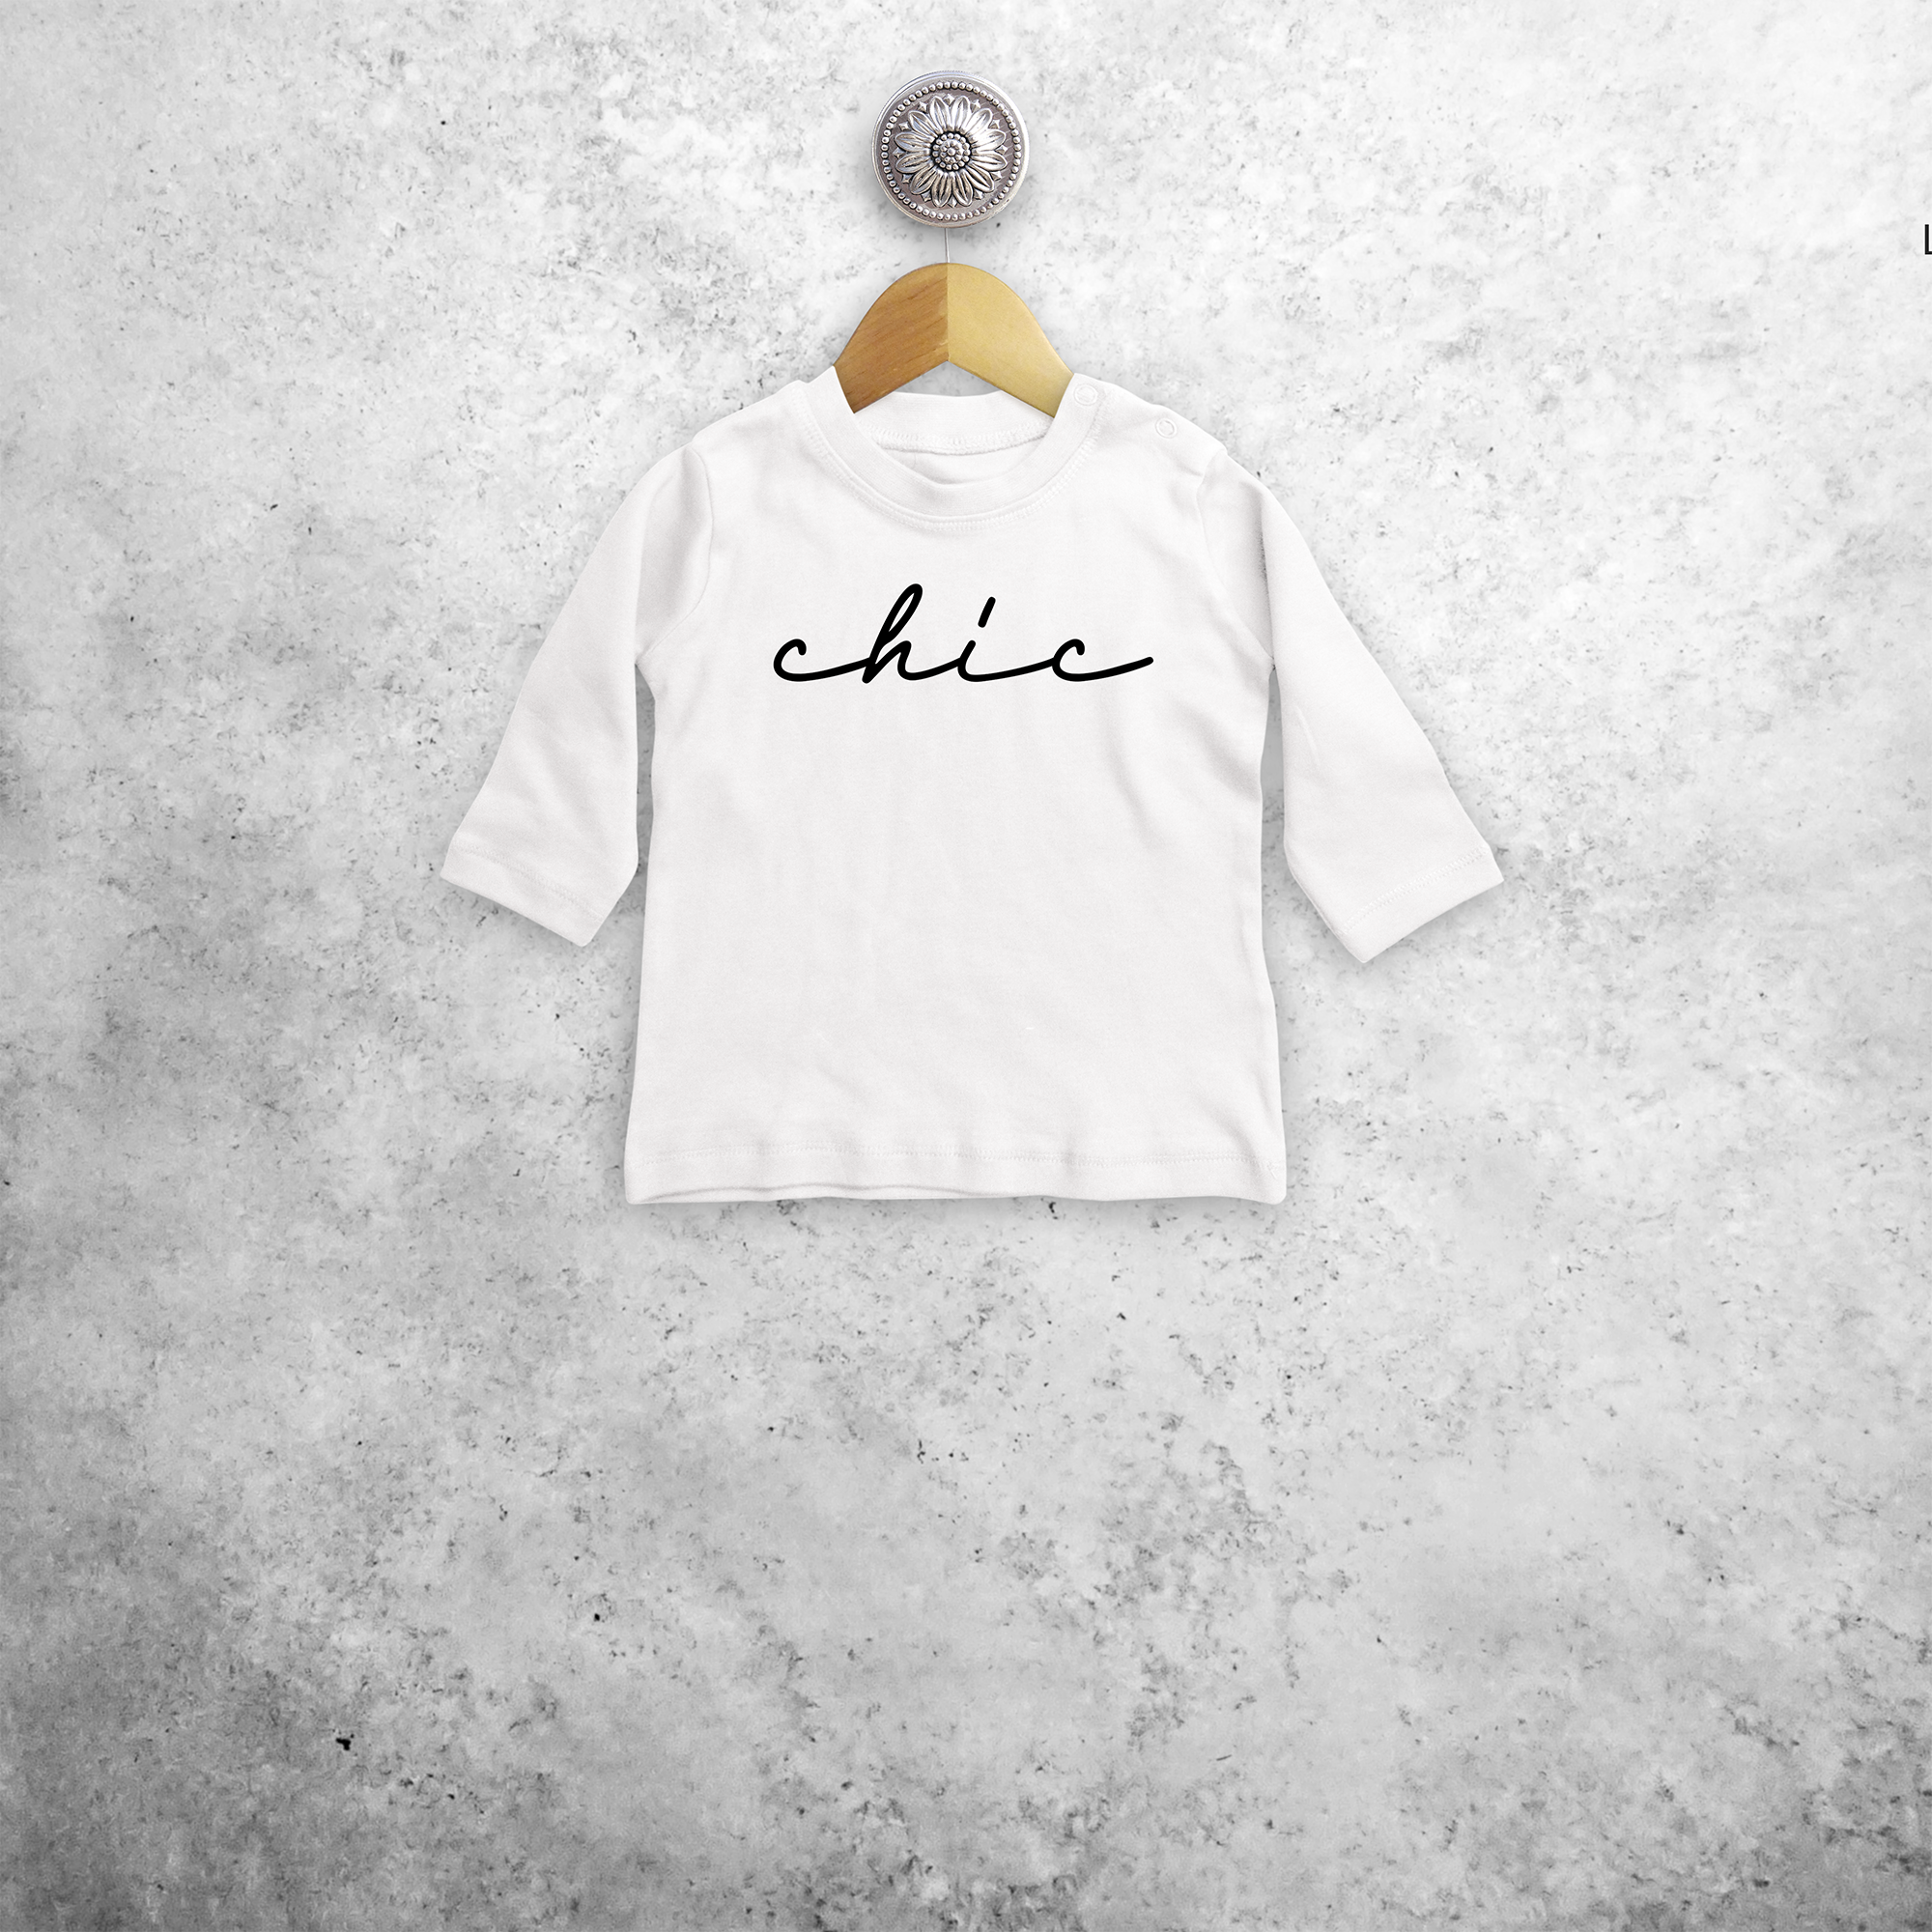 'Chic' baby longsleeve shirt